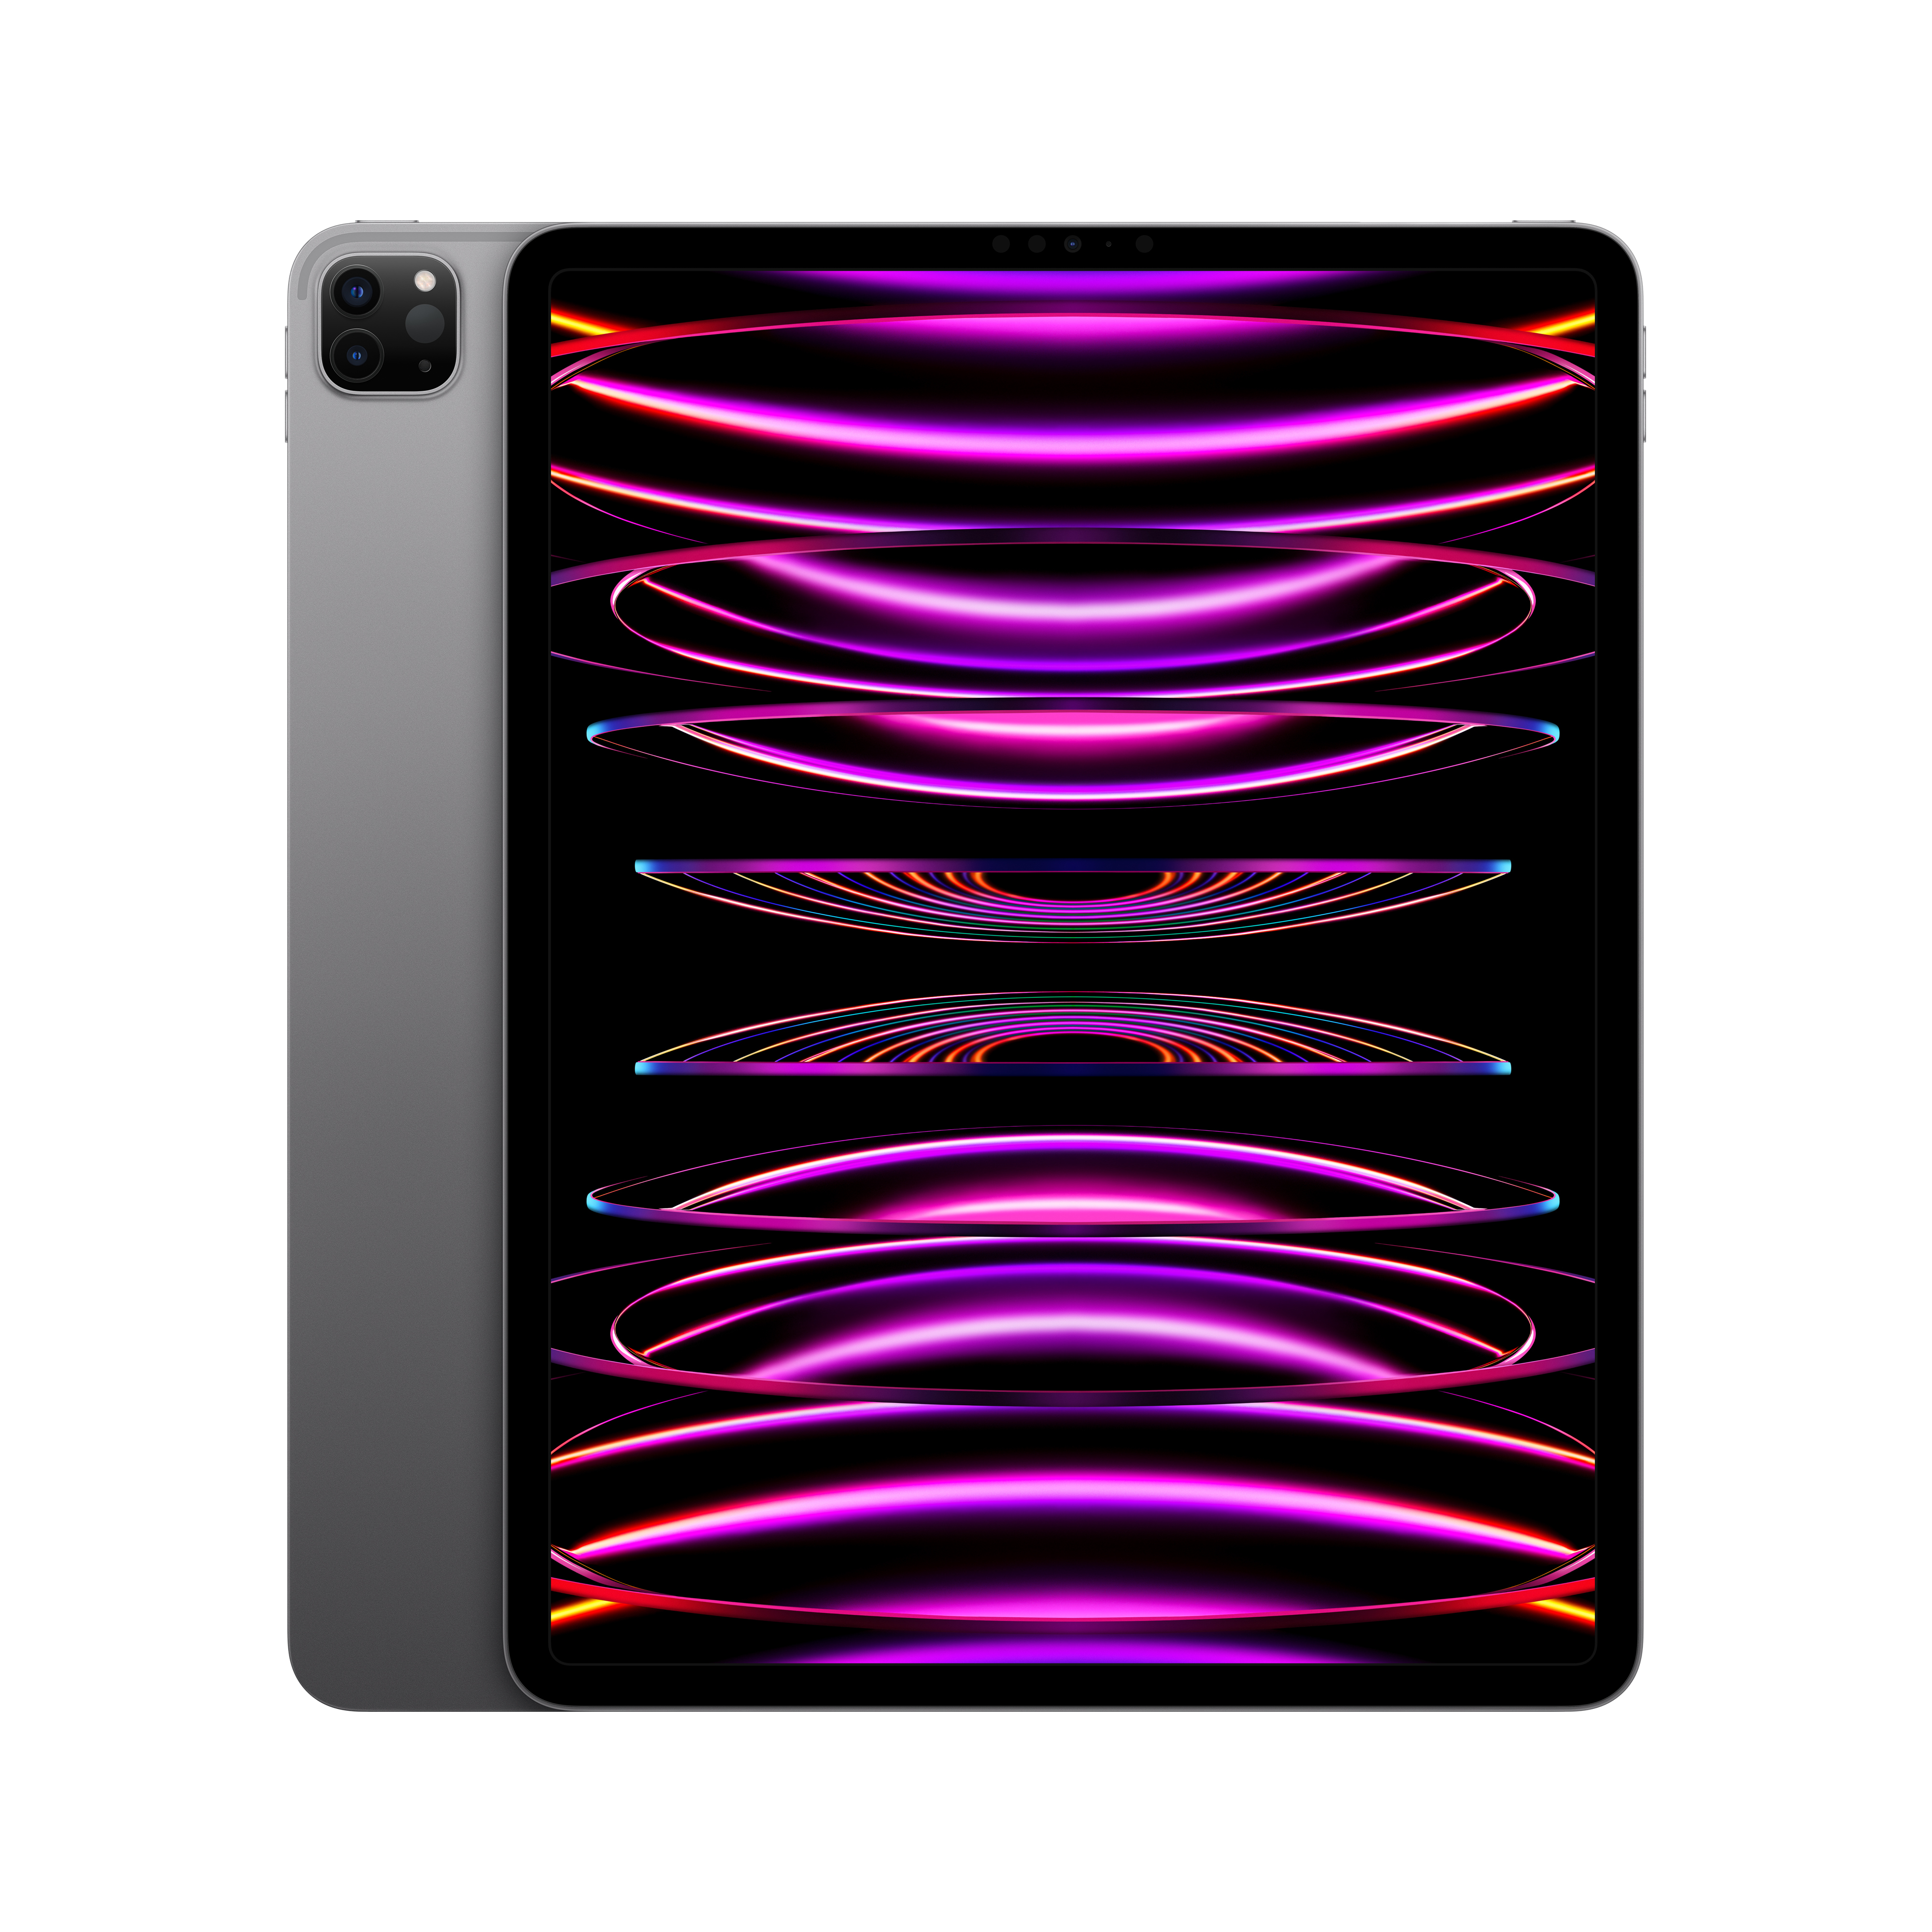 iPad Pro 12.9 (32,77cm) 128GB WIFI spacegrau iOS